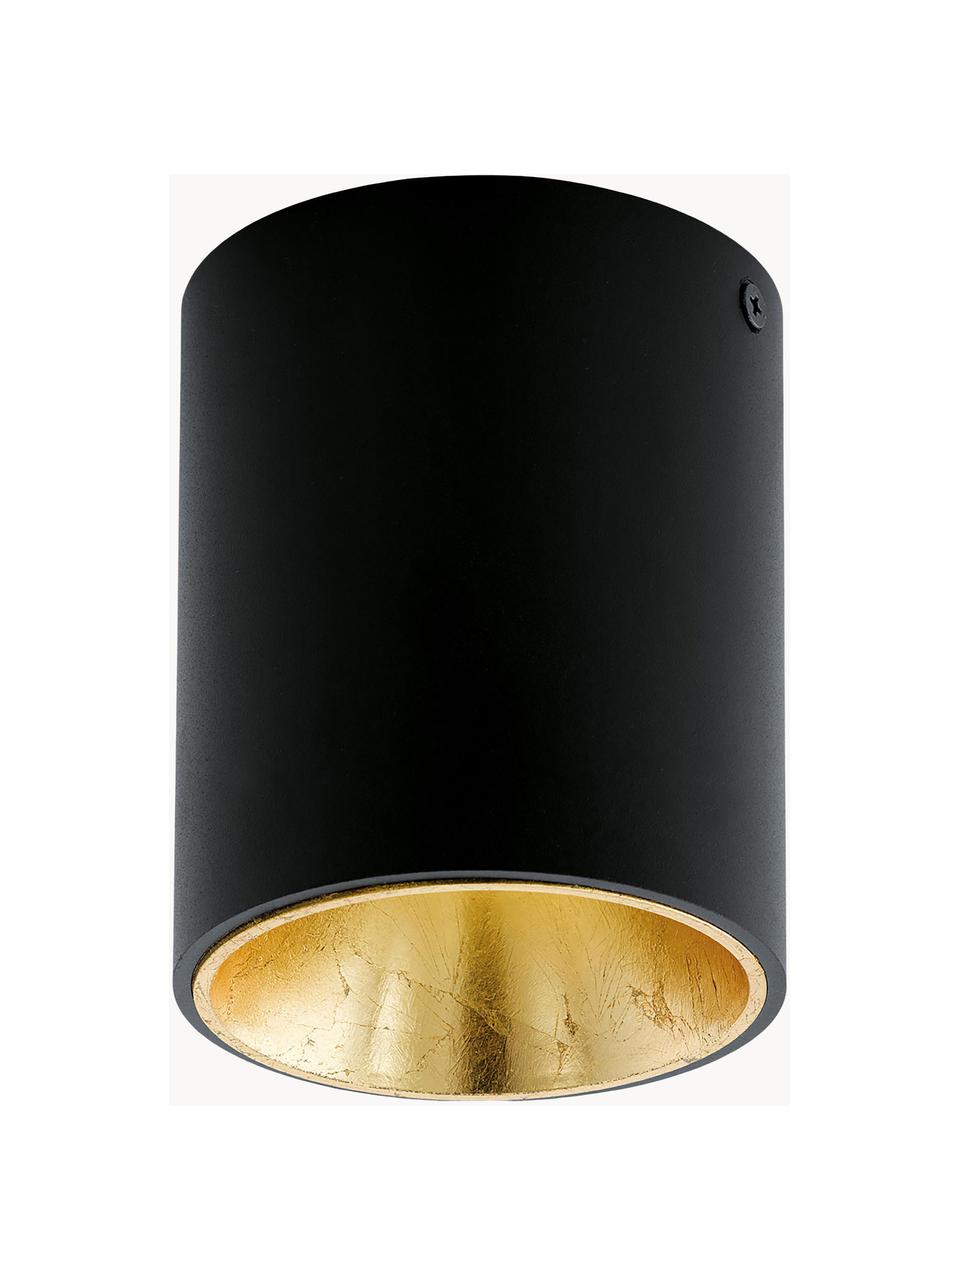 Foco LED Marty, Negro, dorado, Ø 10 x Al 12 cm